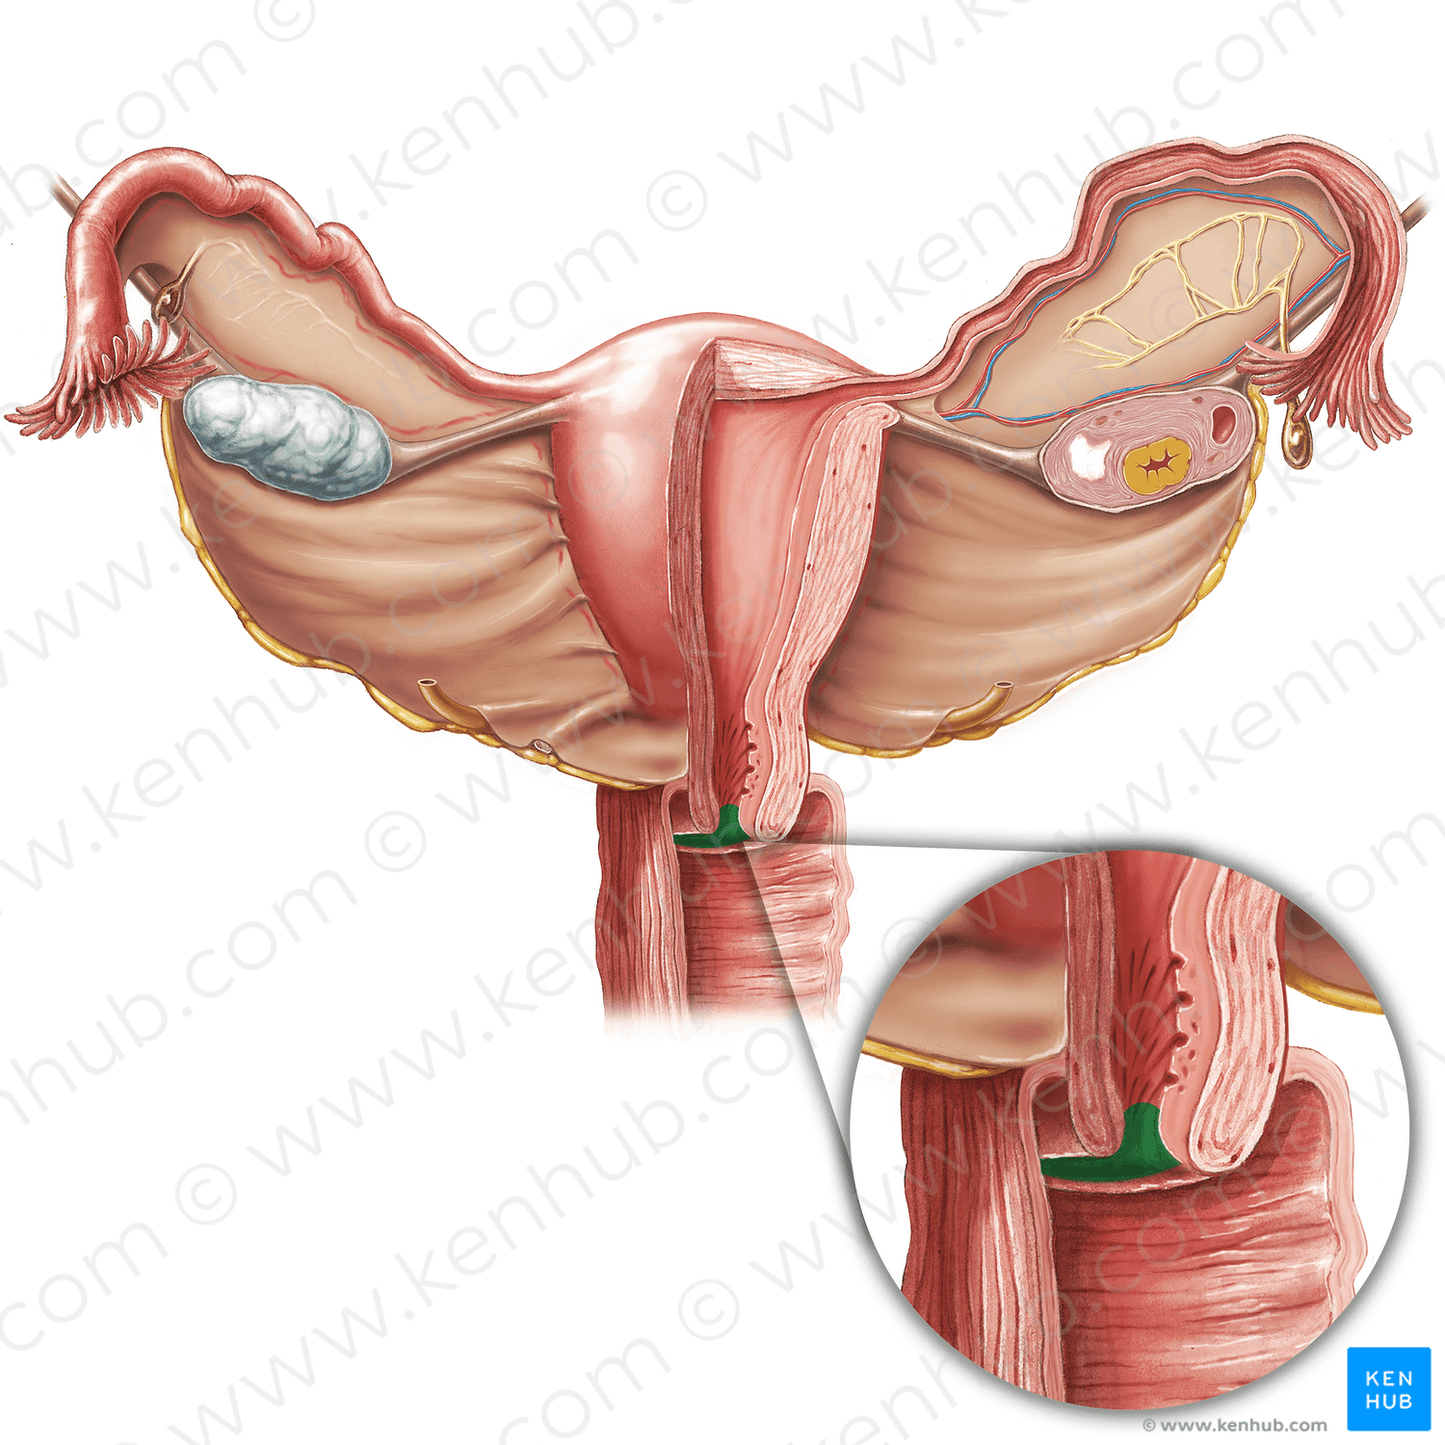 External os of uterus (#7564)